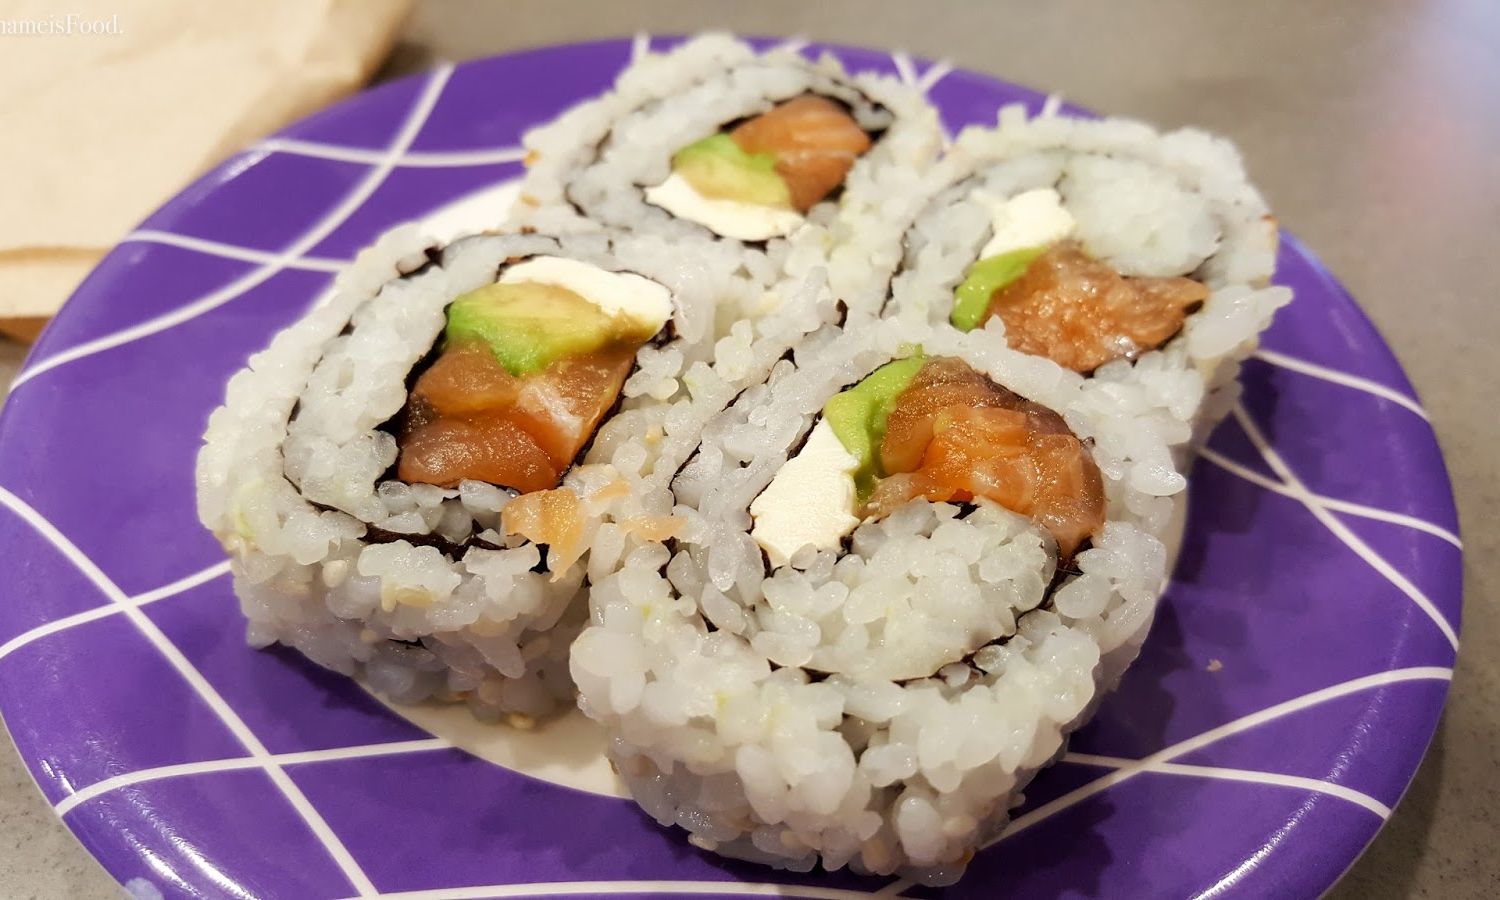 best sushi train brisbane 